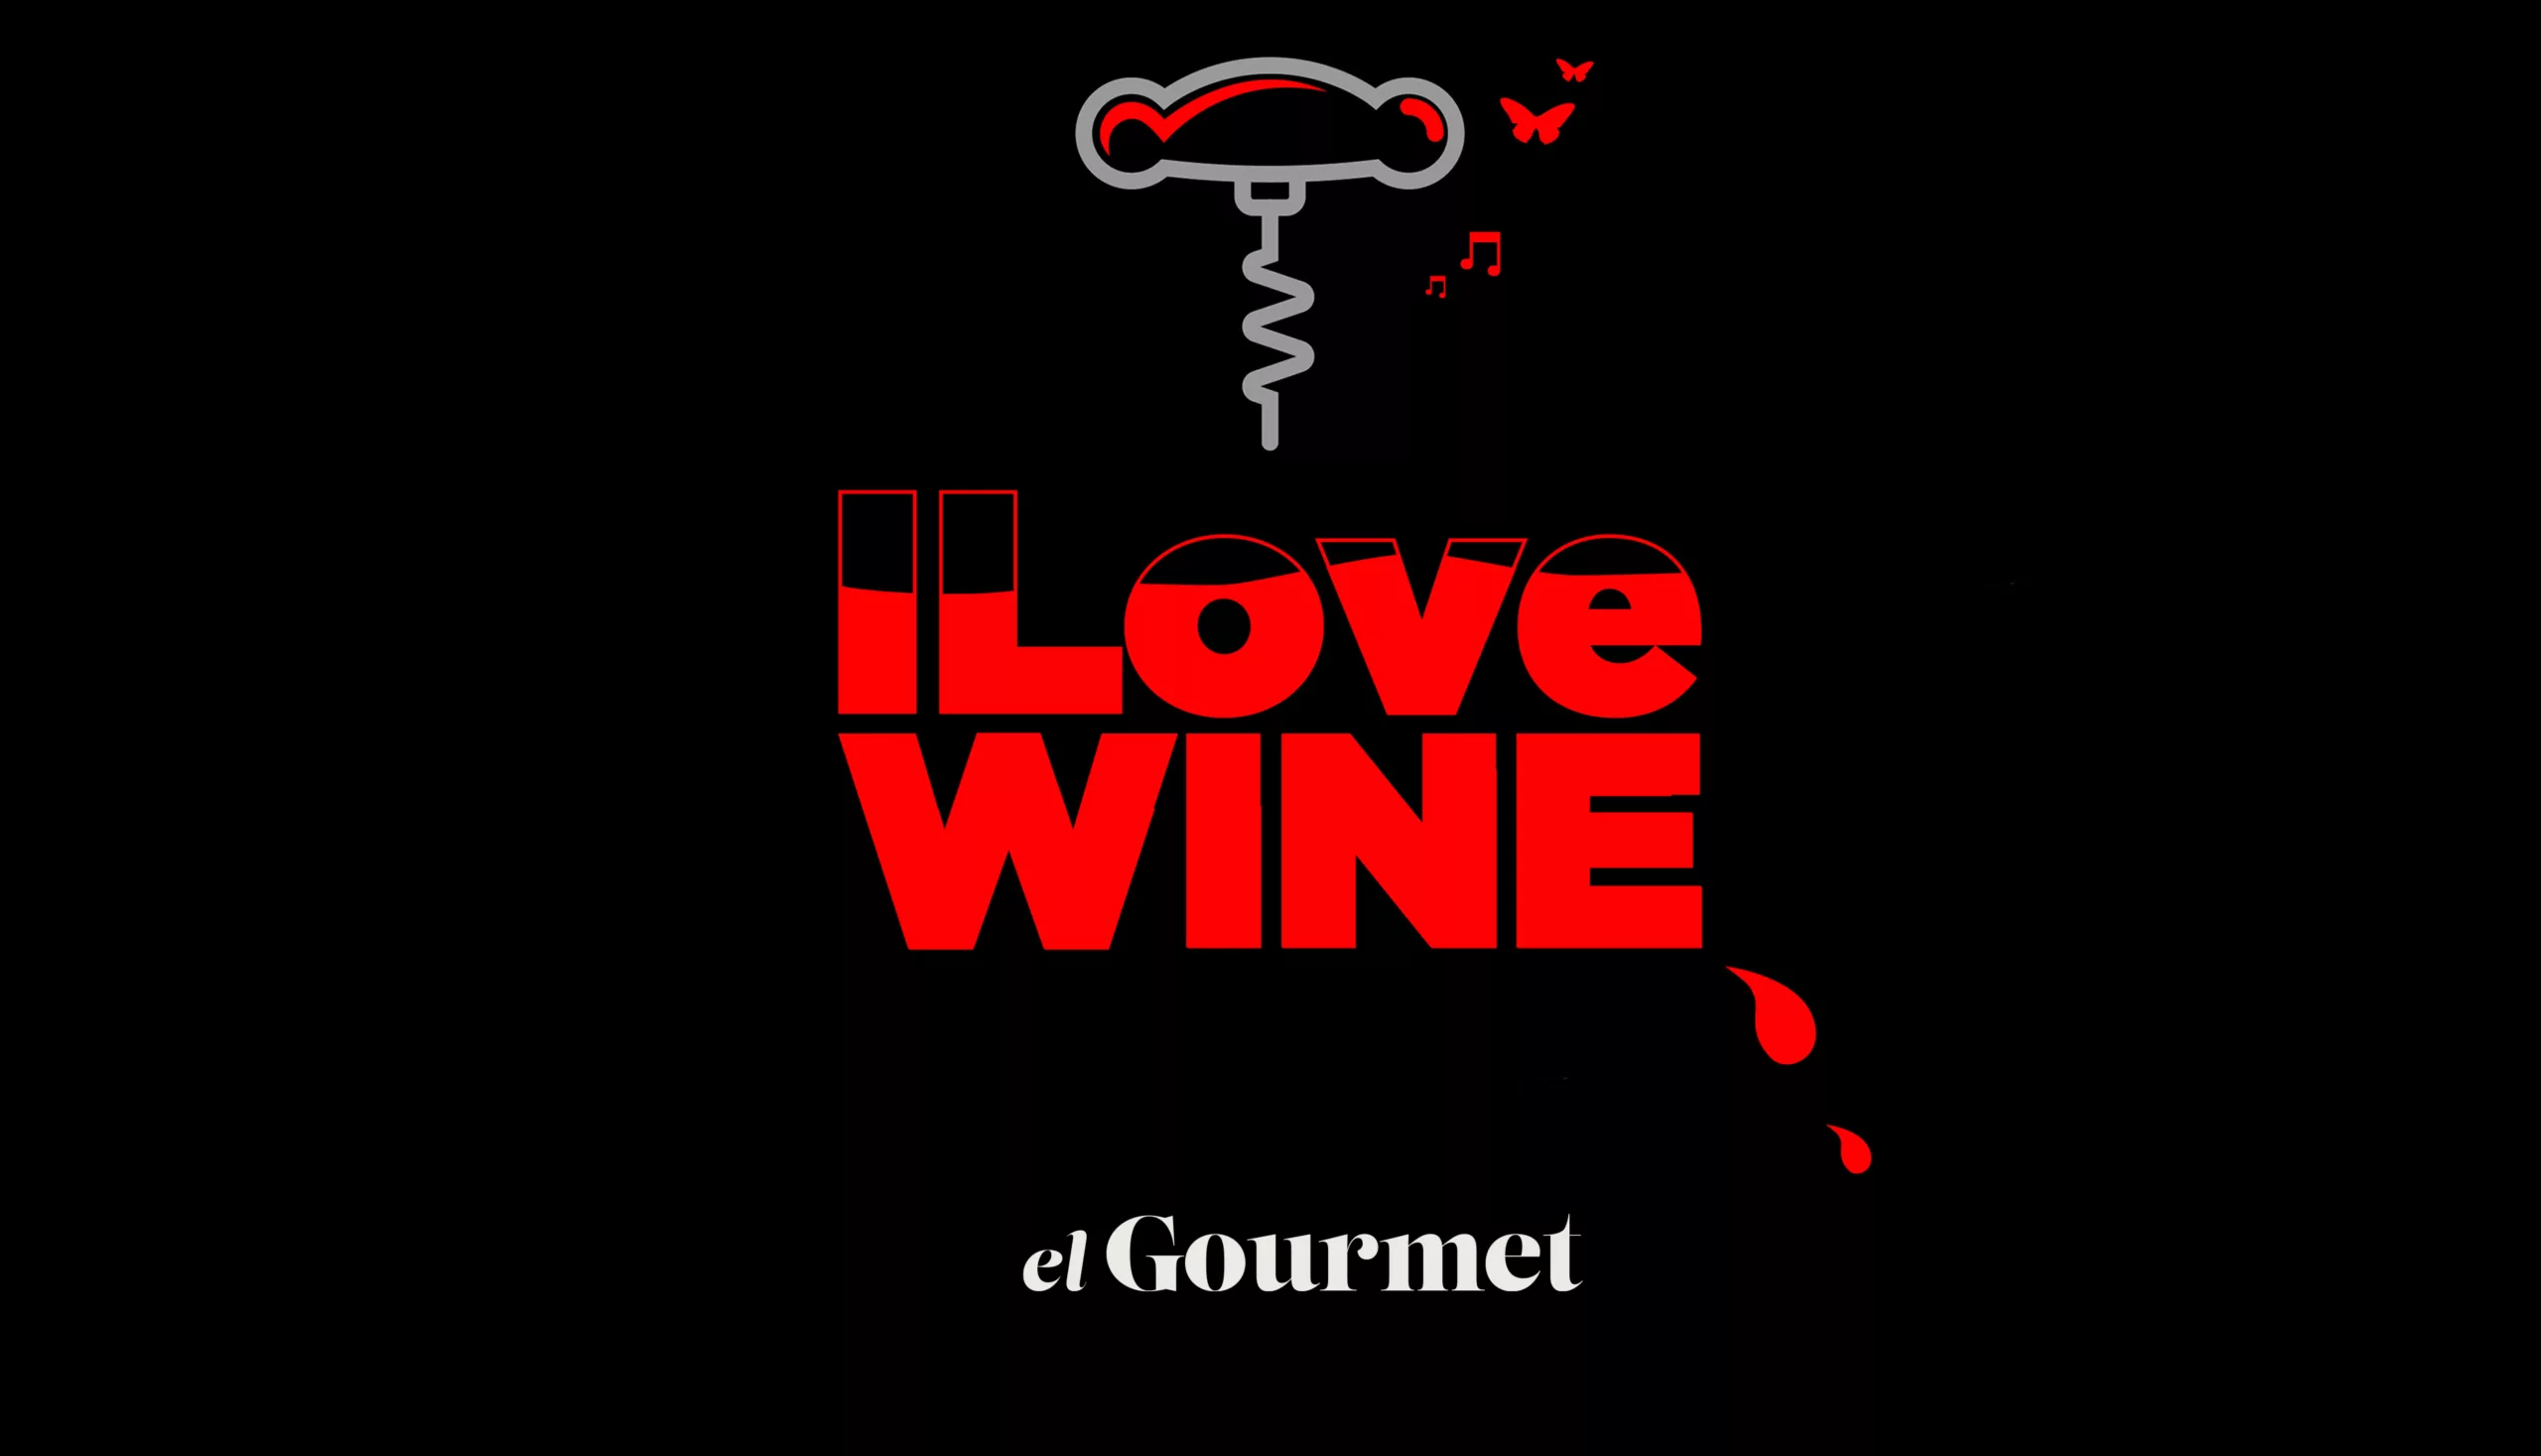 El Gourmet estrena I Love Wine